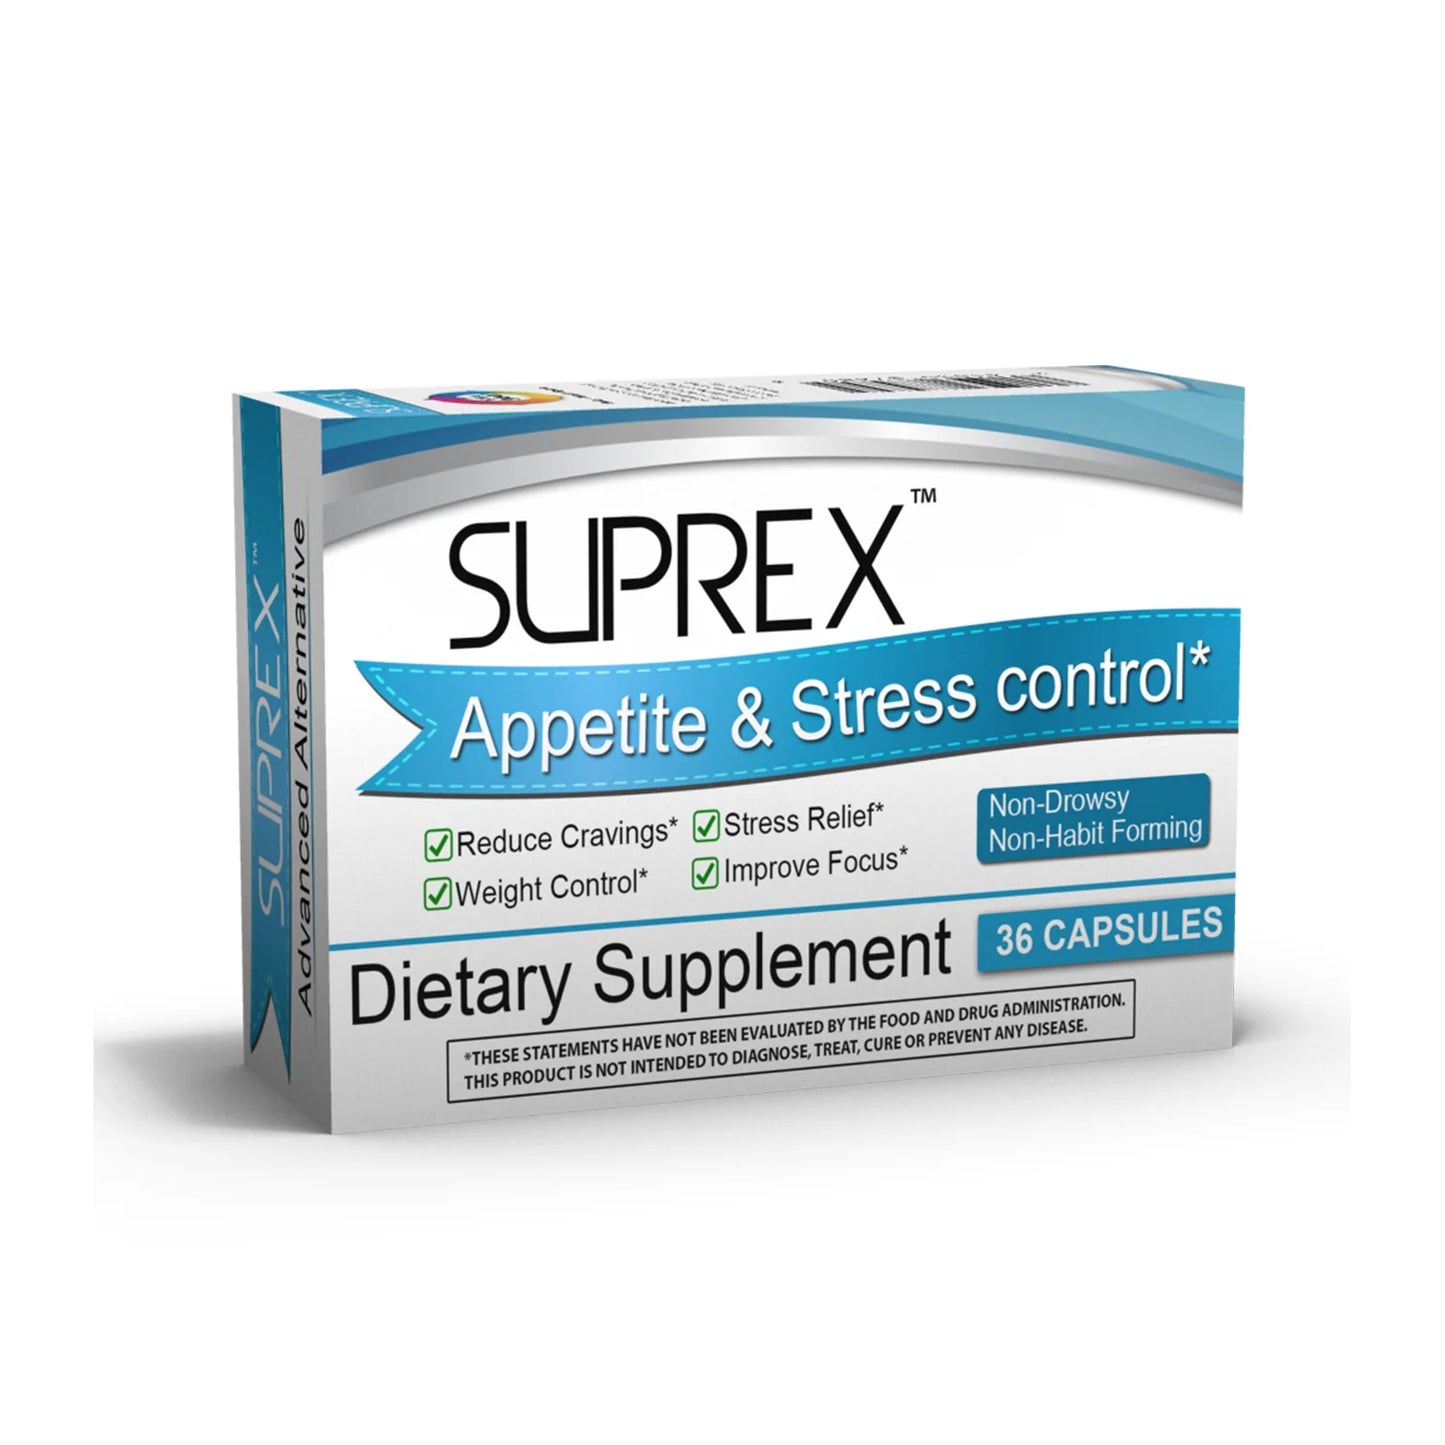 Suprex Appetite & Stress Control